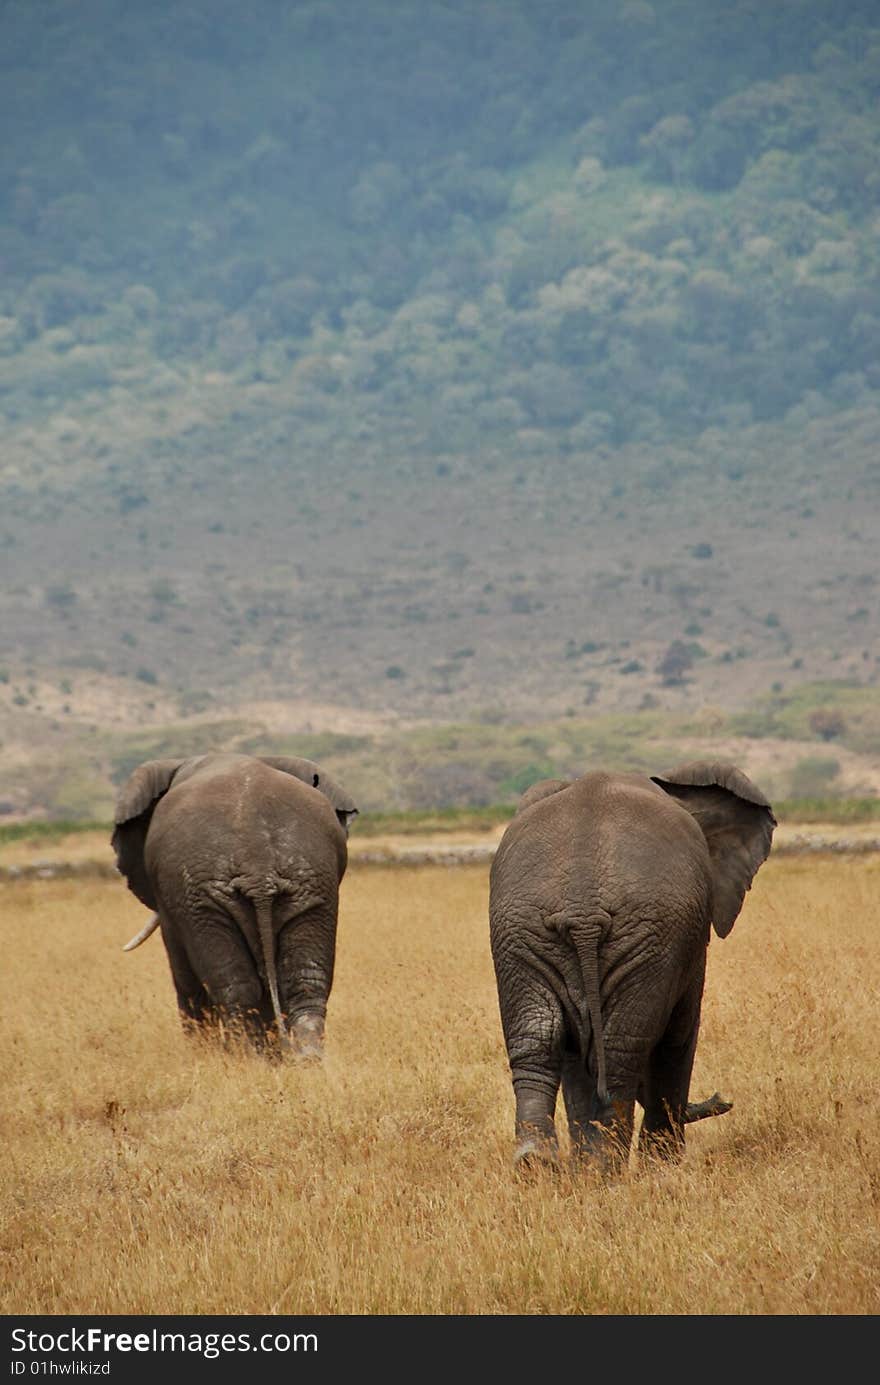 Two African elephants walking away in the Ngorongoro crater, Tanzania.